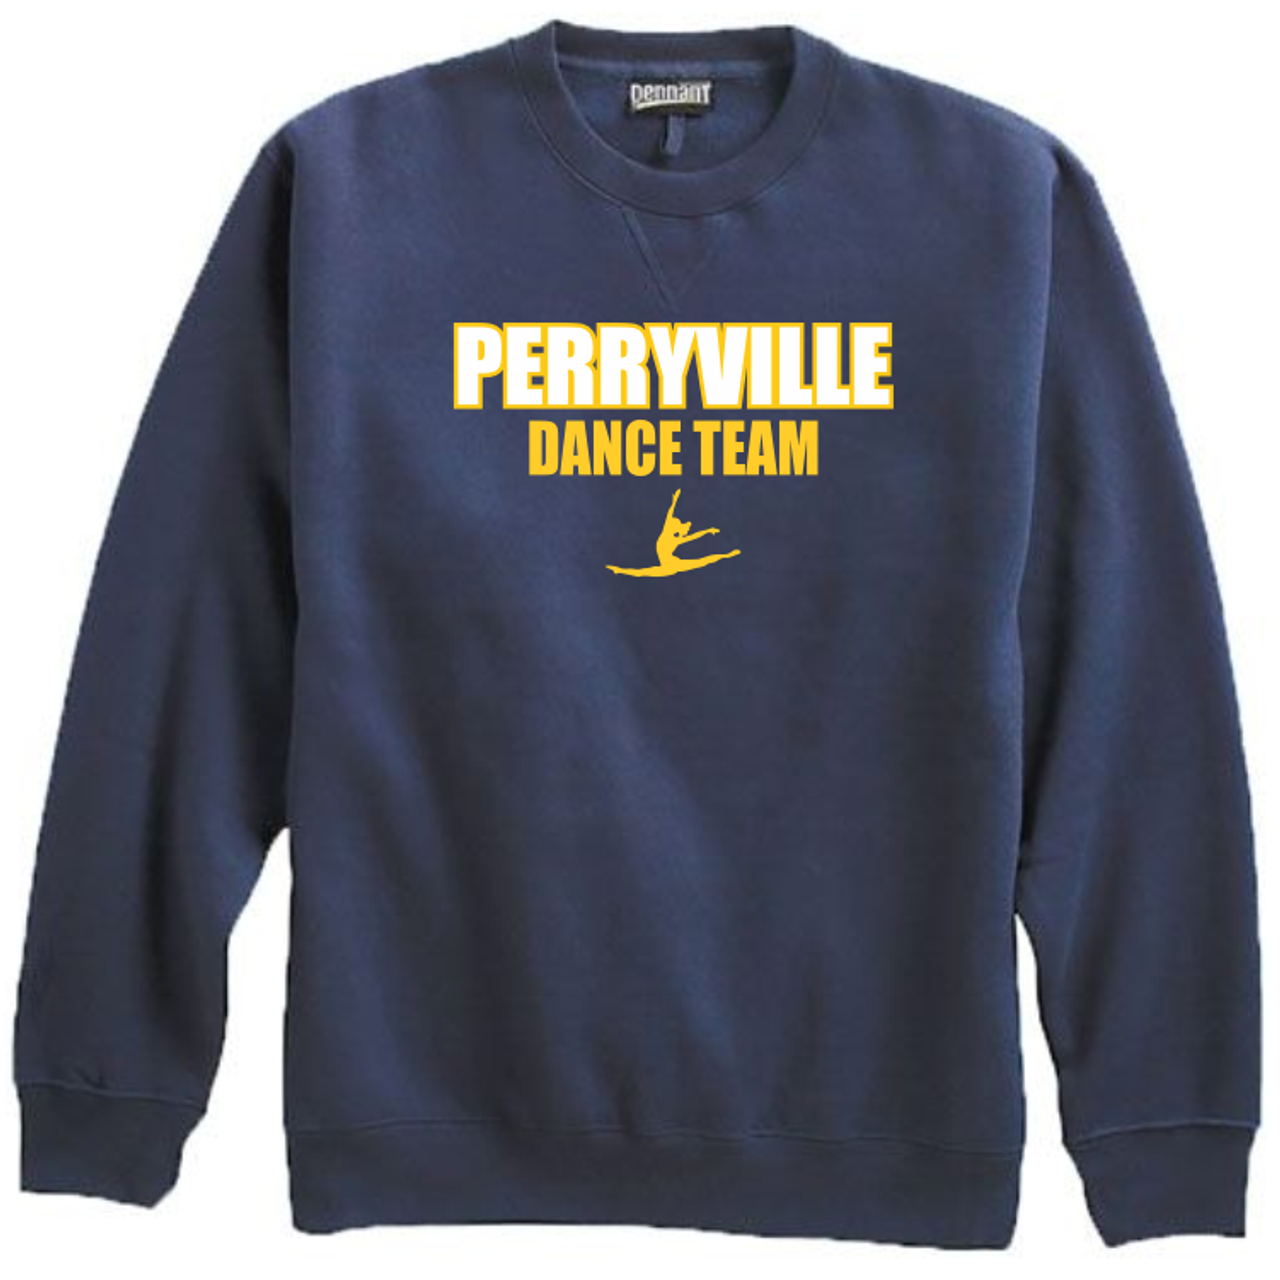 Perryville MS Dance Team Crewneck, Navy